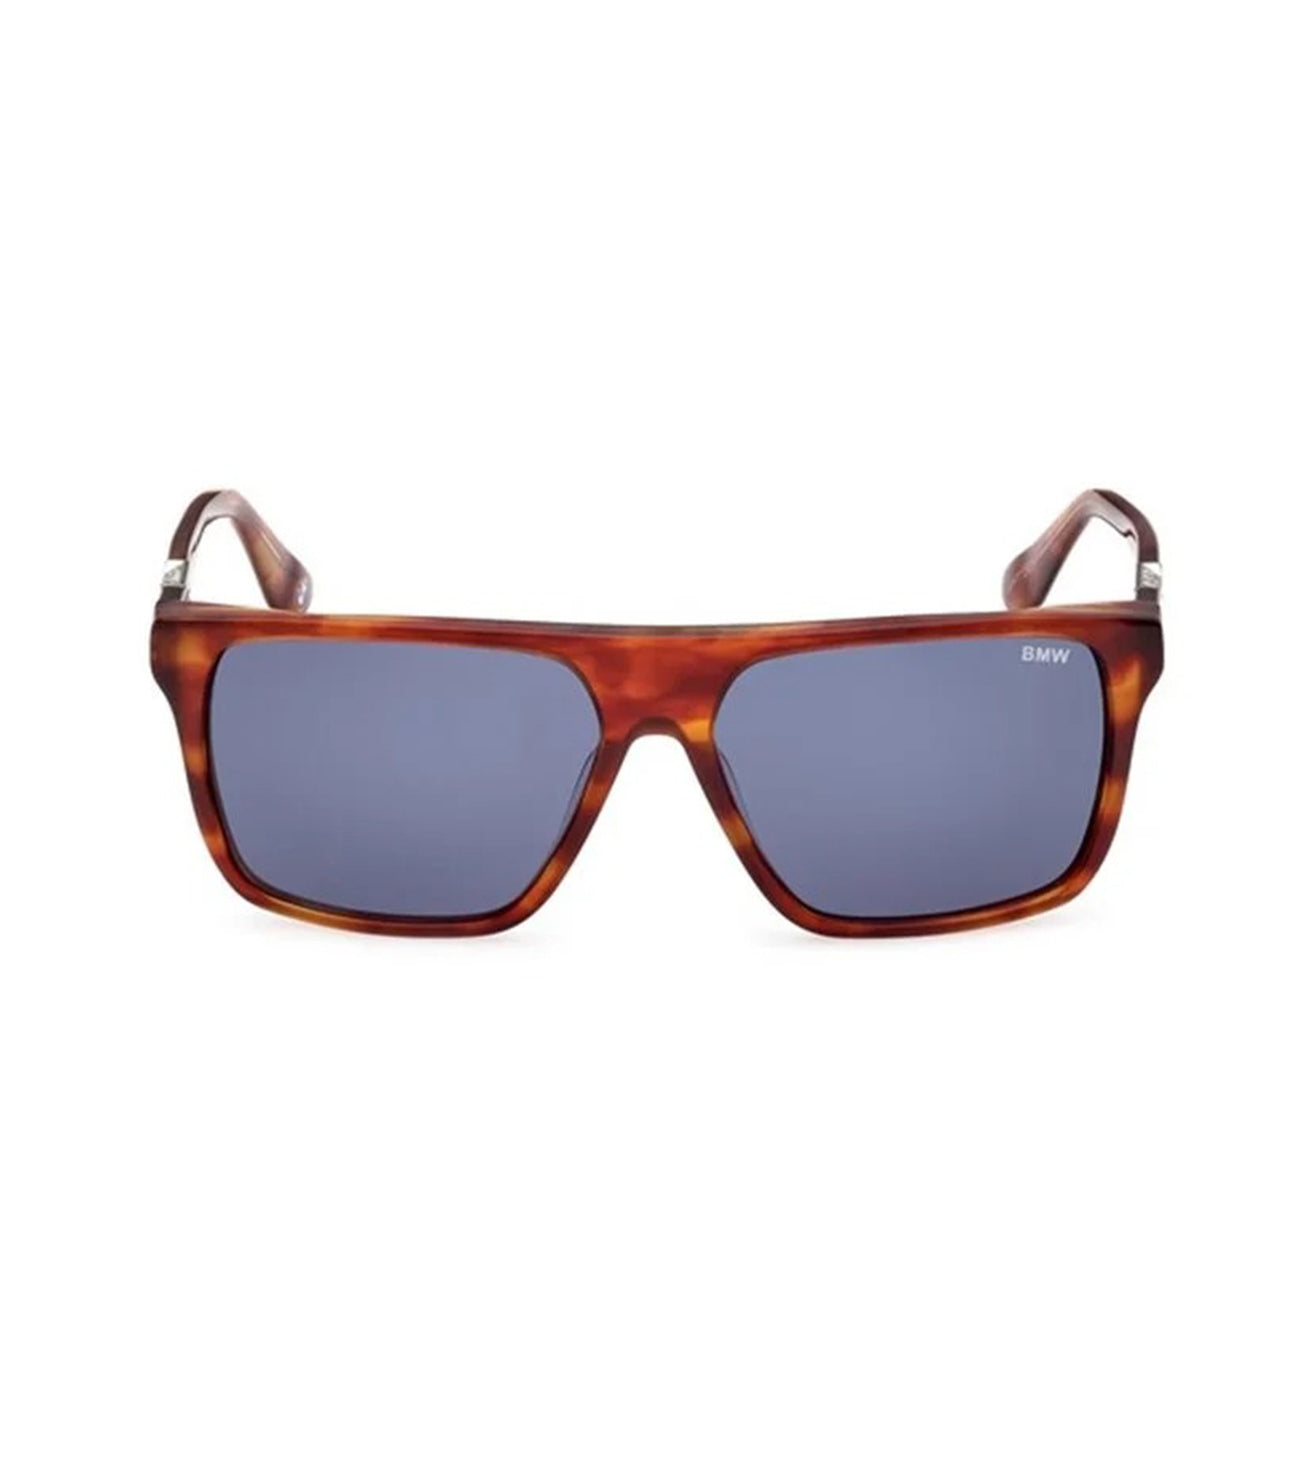 BMW Men's Blue Wayfarer Sunglasses